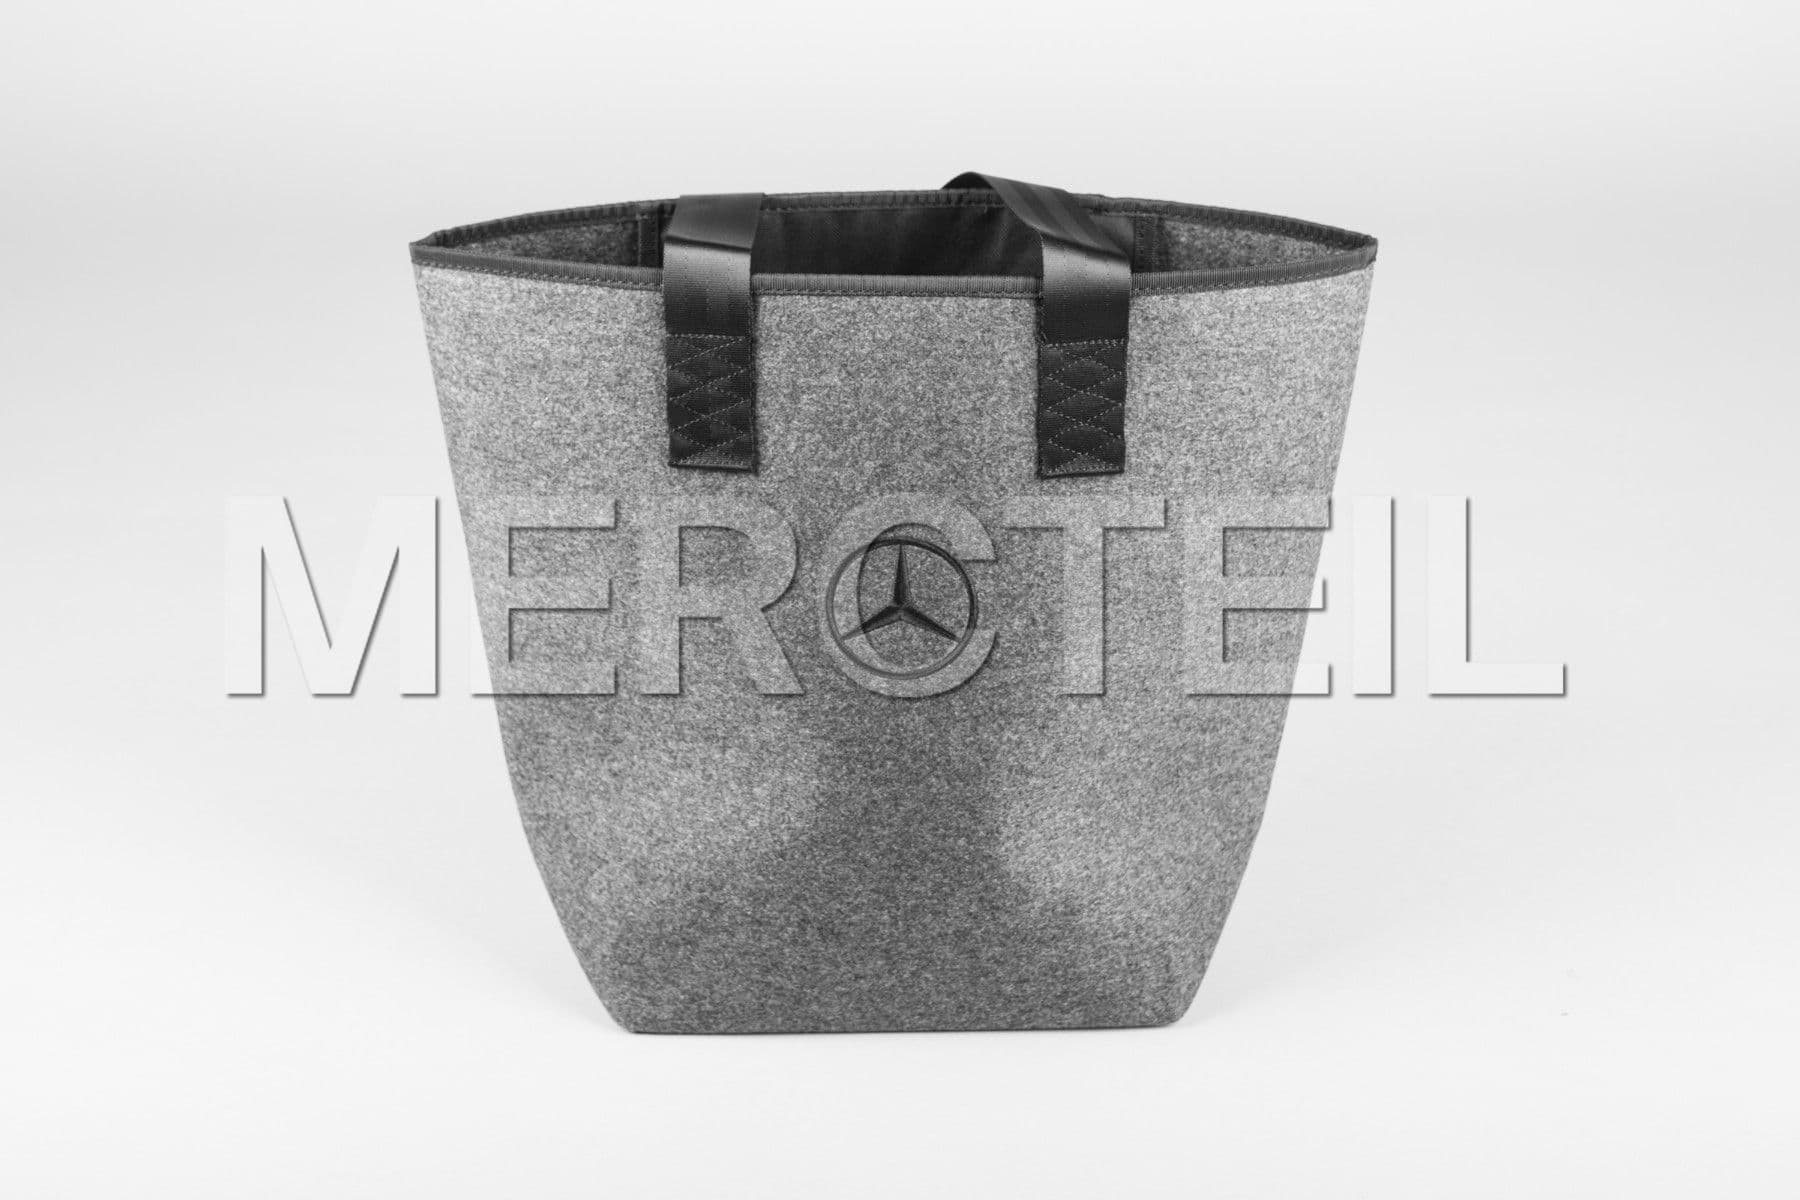 Original Mercedes Einkaufstasche Filz Tasche Shopper Bag Filztasche B66952989 